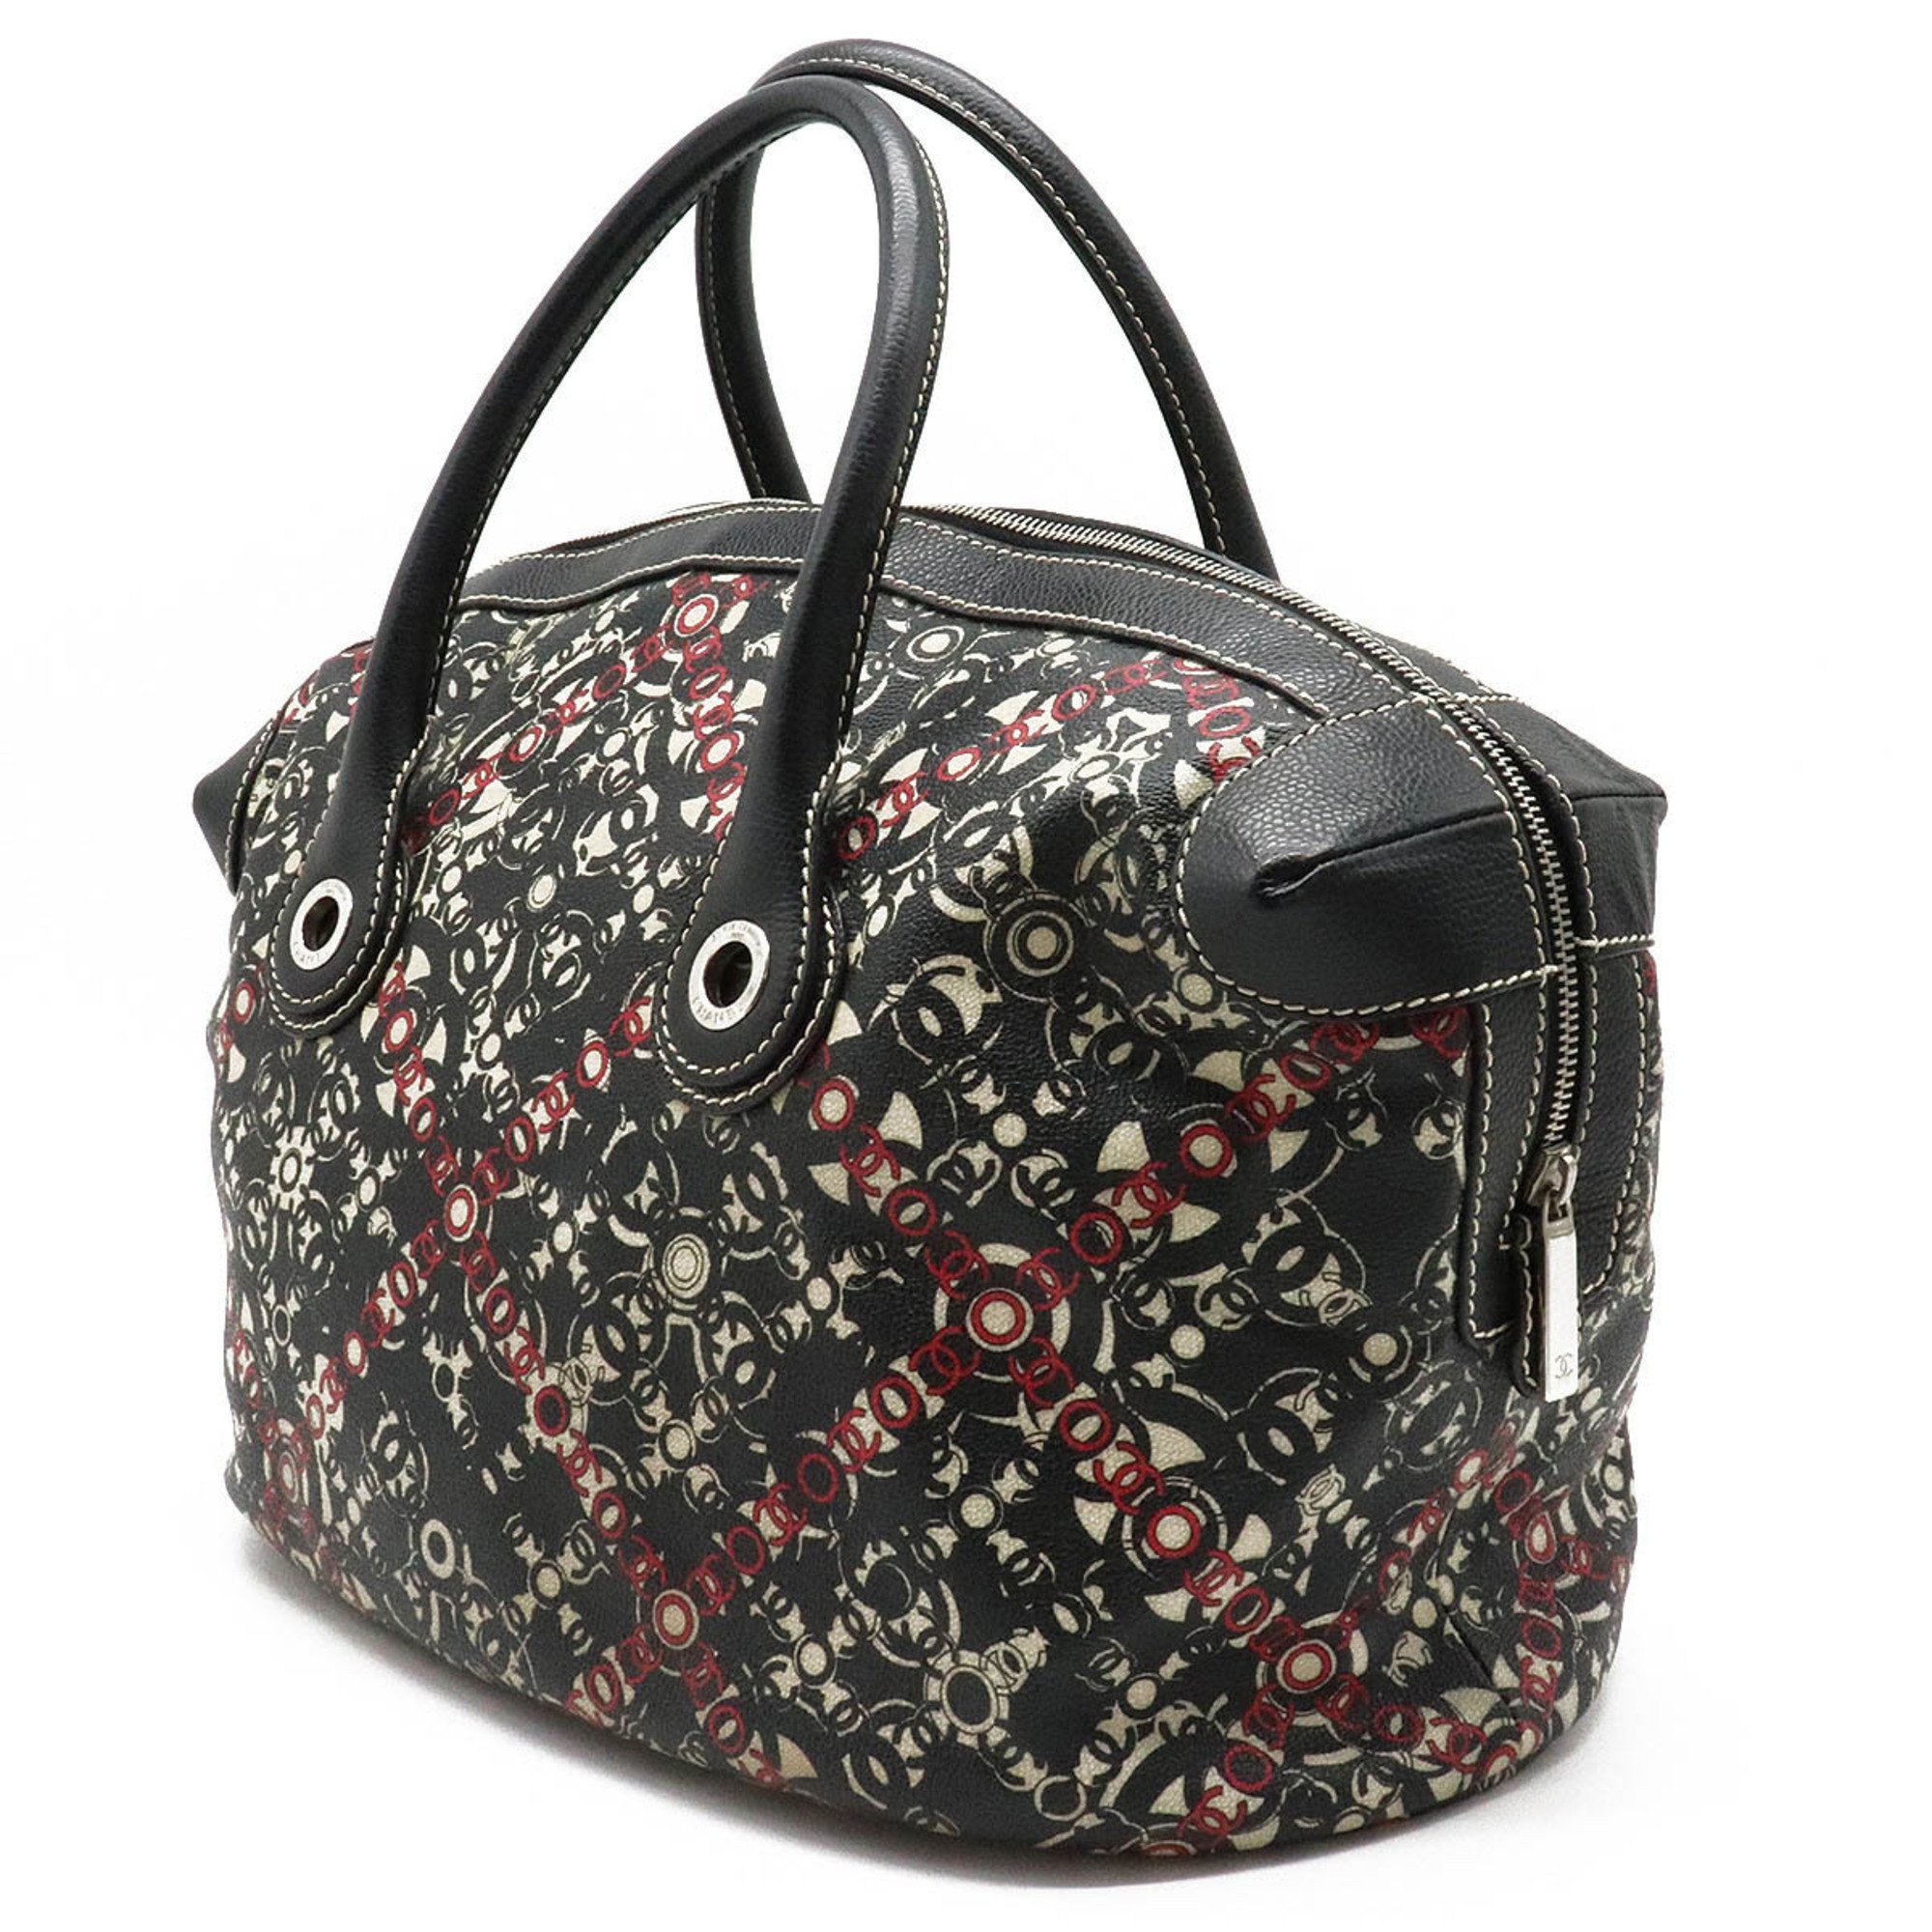 CHANEL Chanel Coco handbag Boston bag PVC leather black beige red